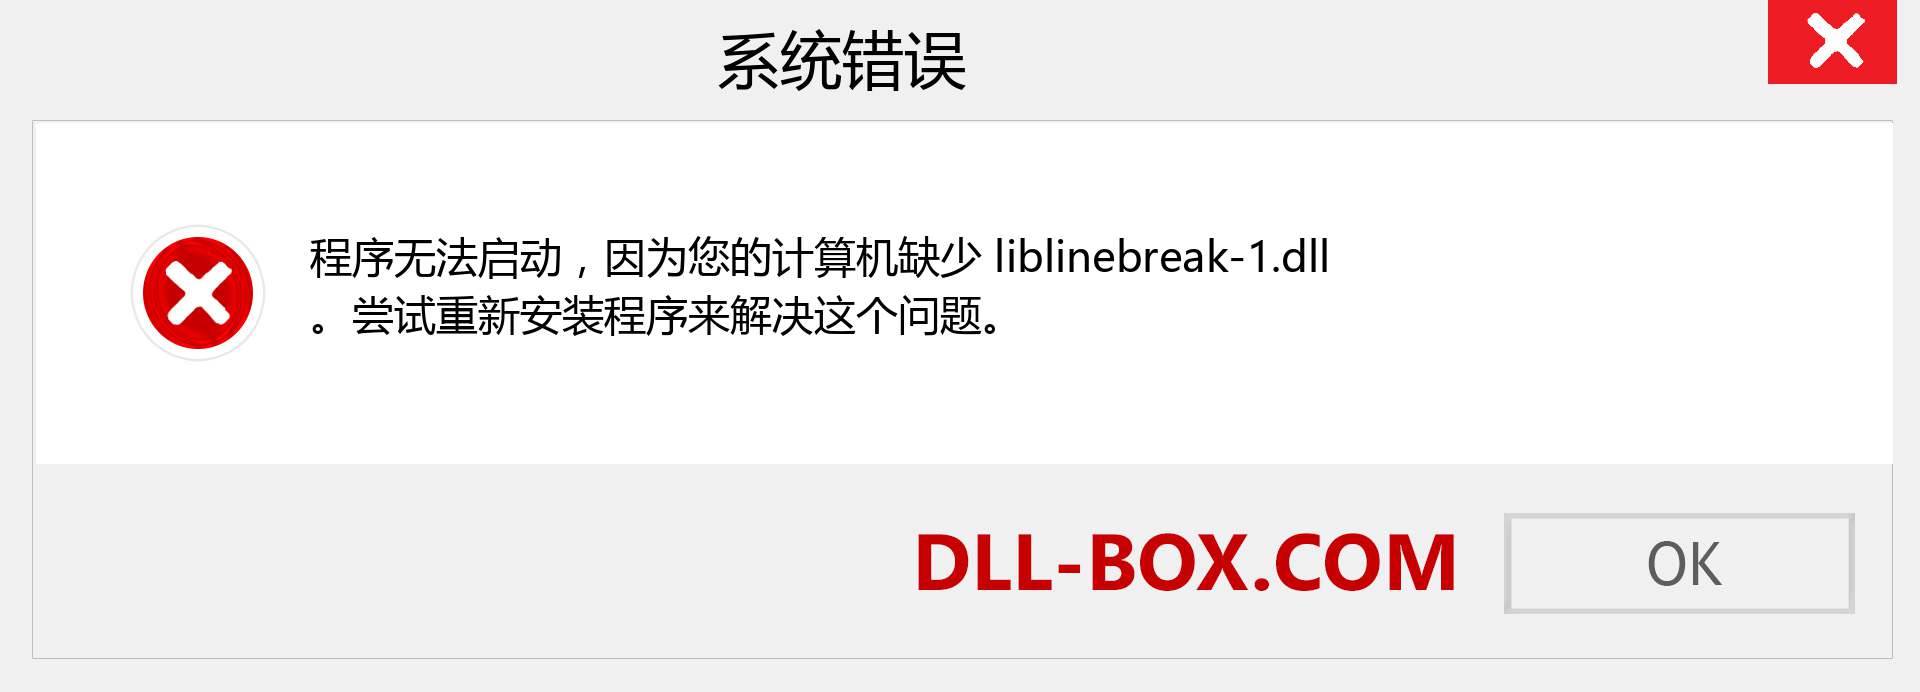 liblinebreak-1.dll 文件丢失？。 适用于 Windows 7、8、10 的下载 - 修复 Windows、照片、图像上的 liblinebreak-1 dll 丢失错误